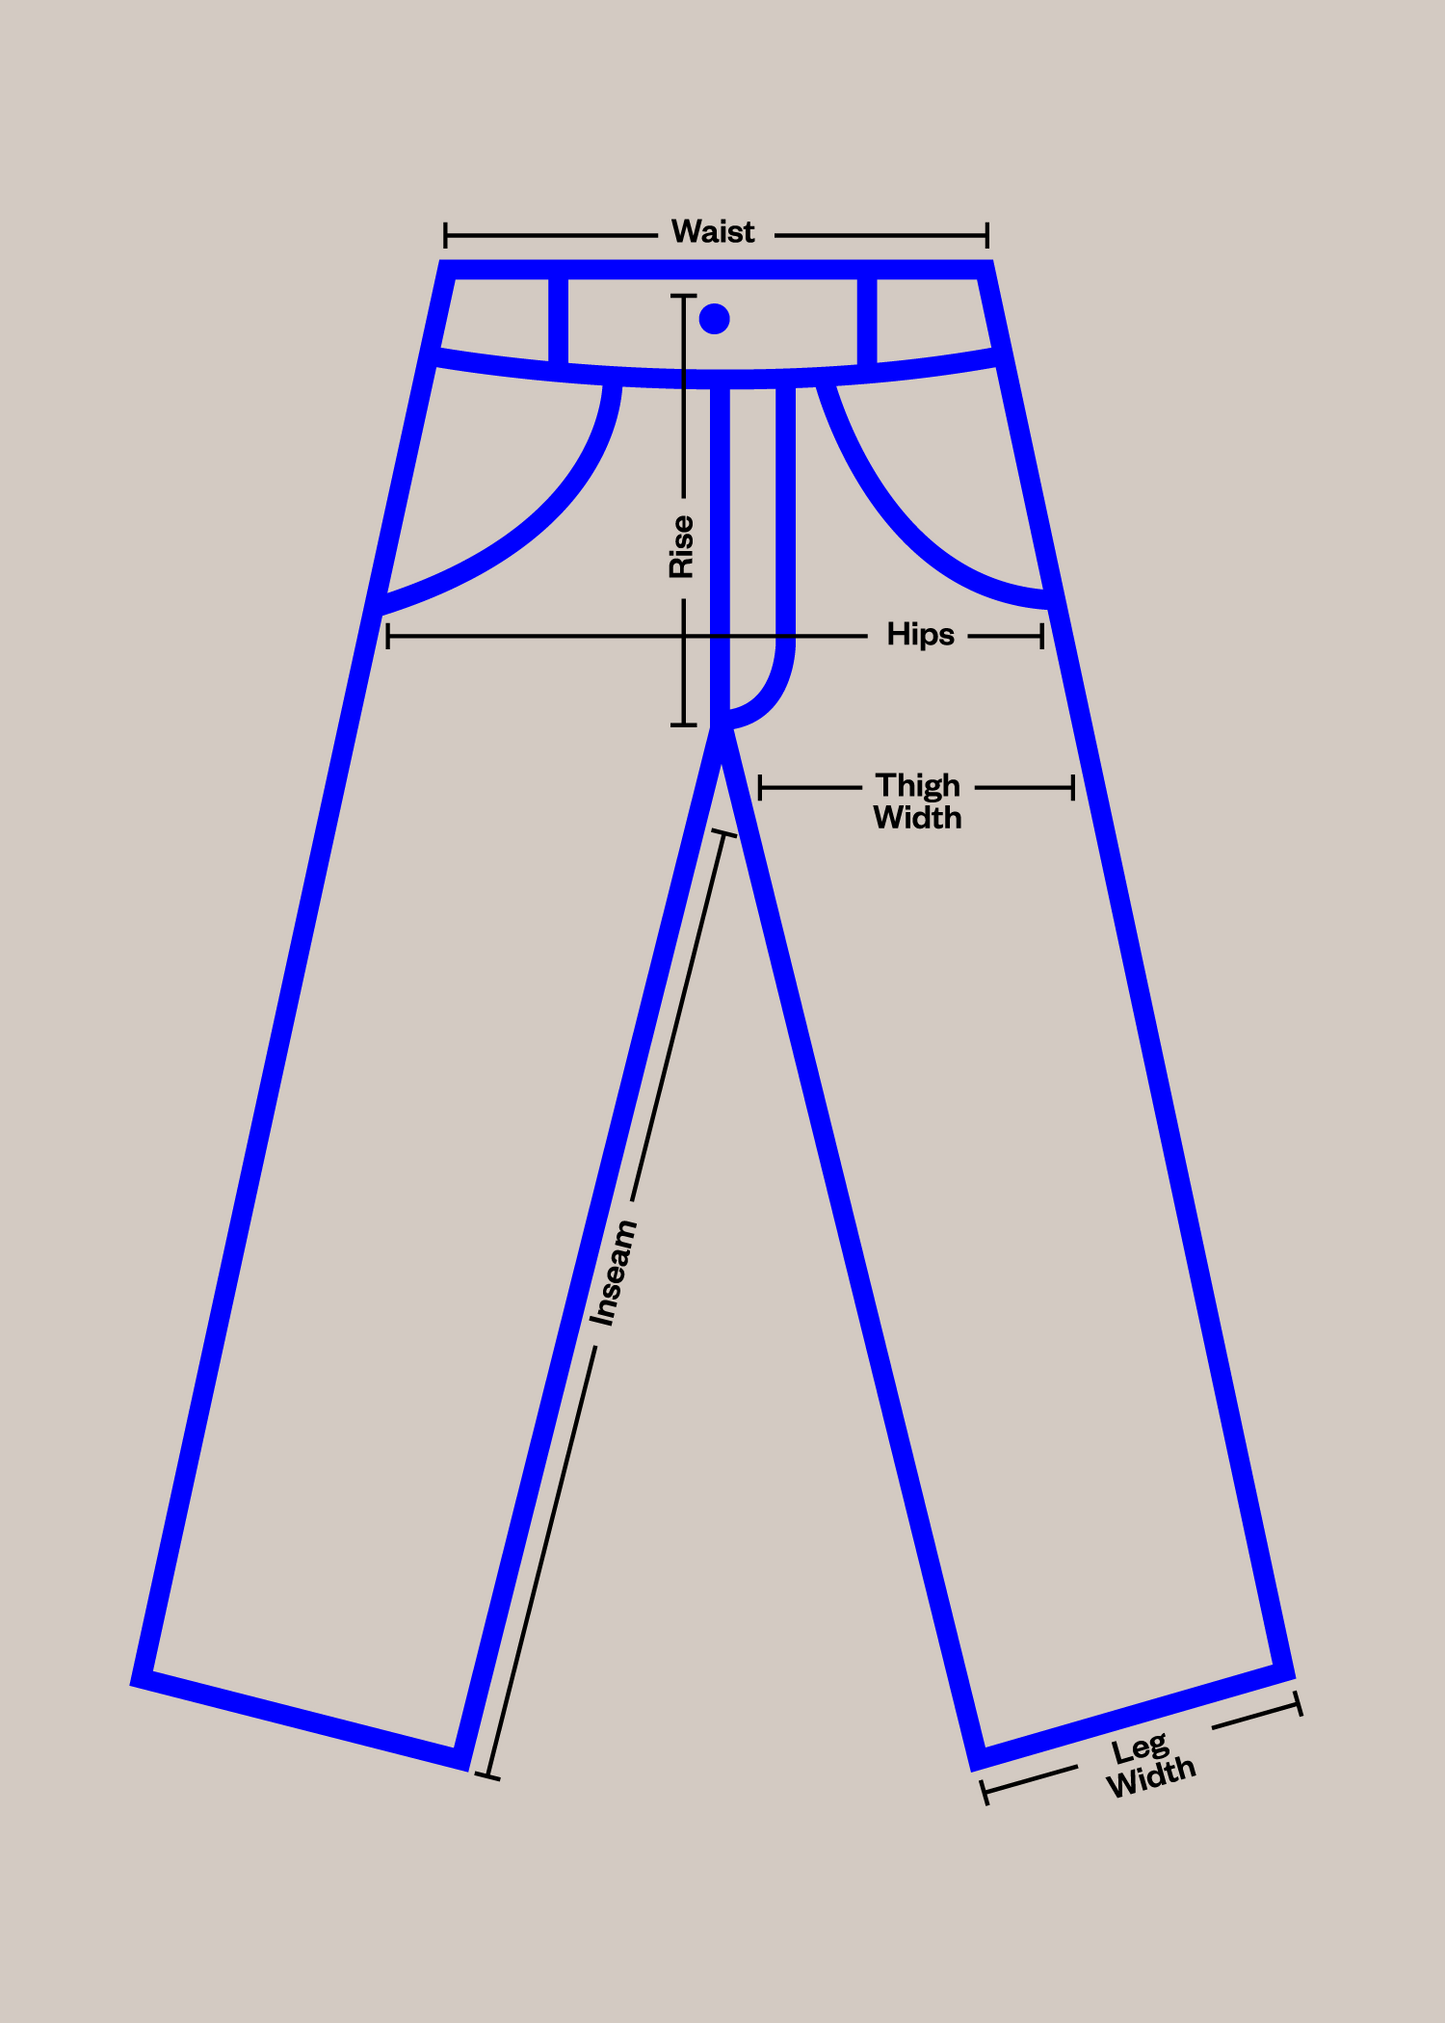 1960s Esso Mechanic Suit Coverall Size L/XL